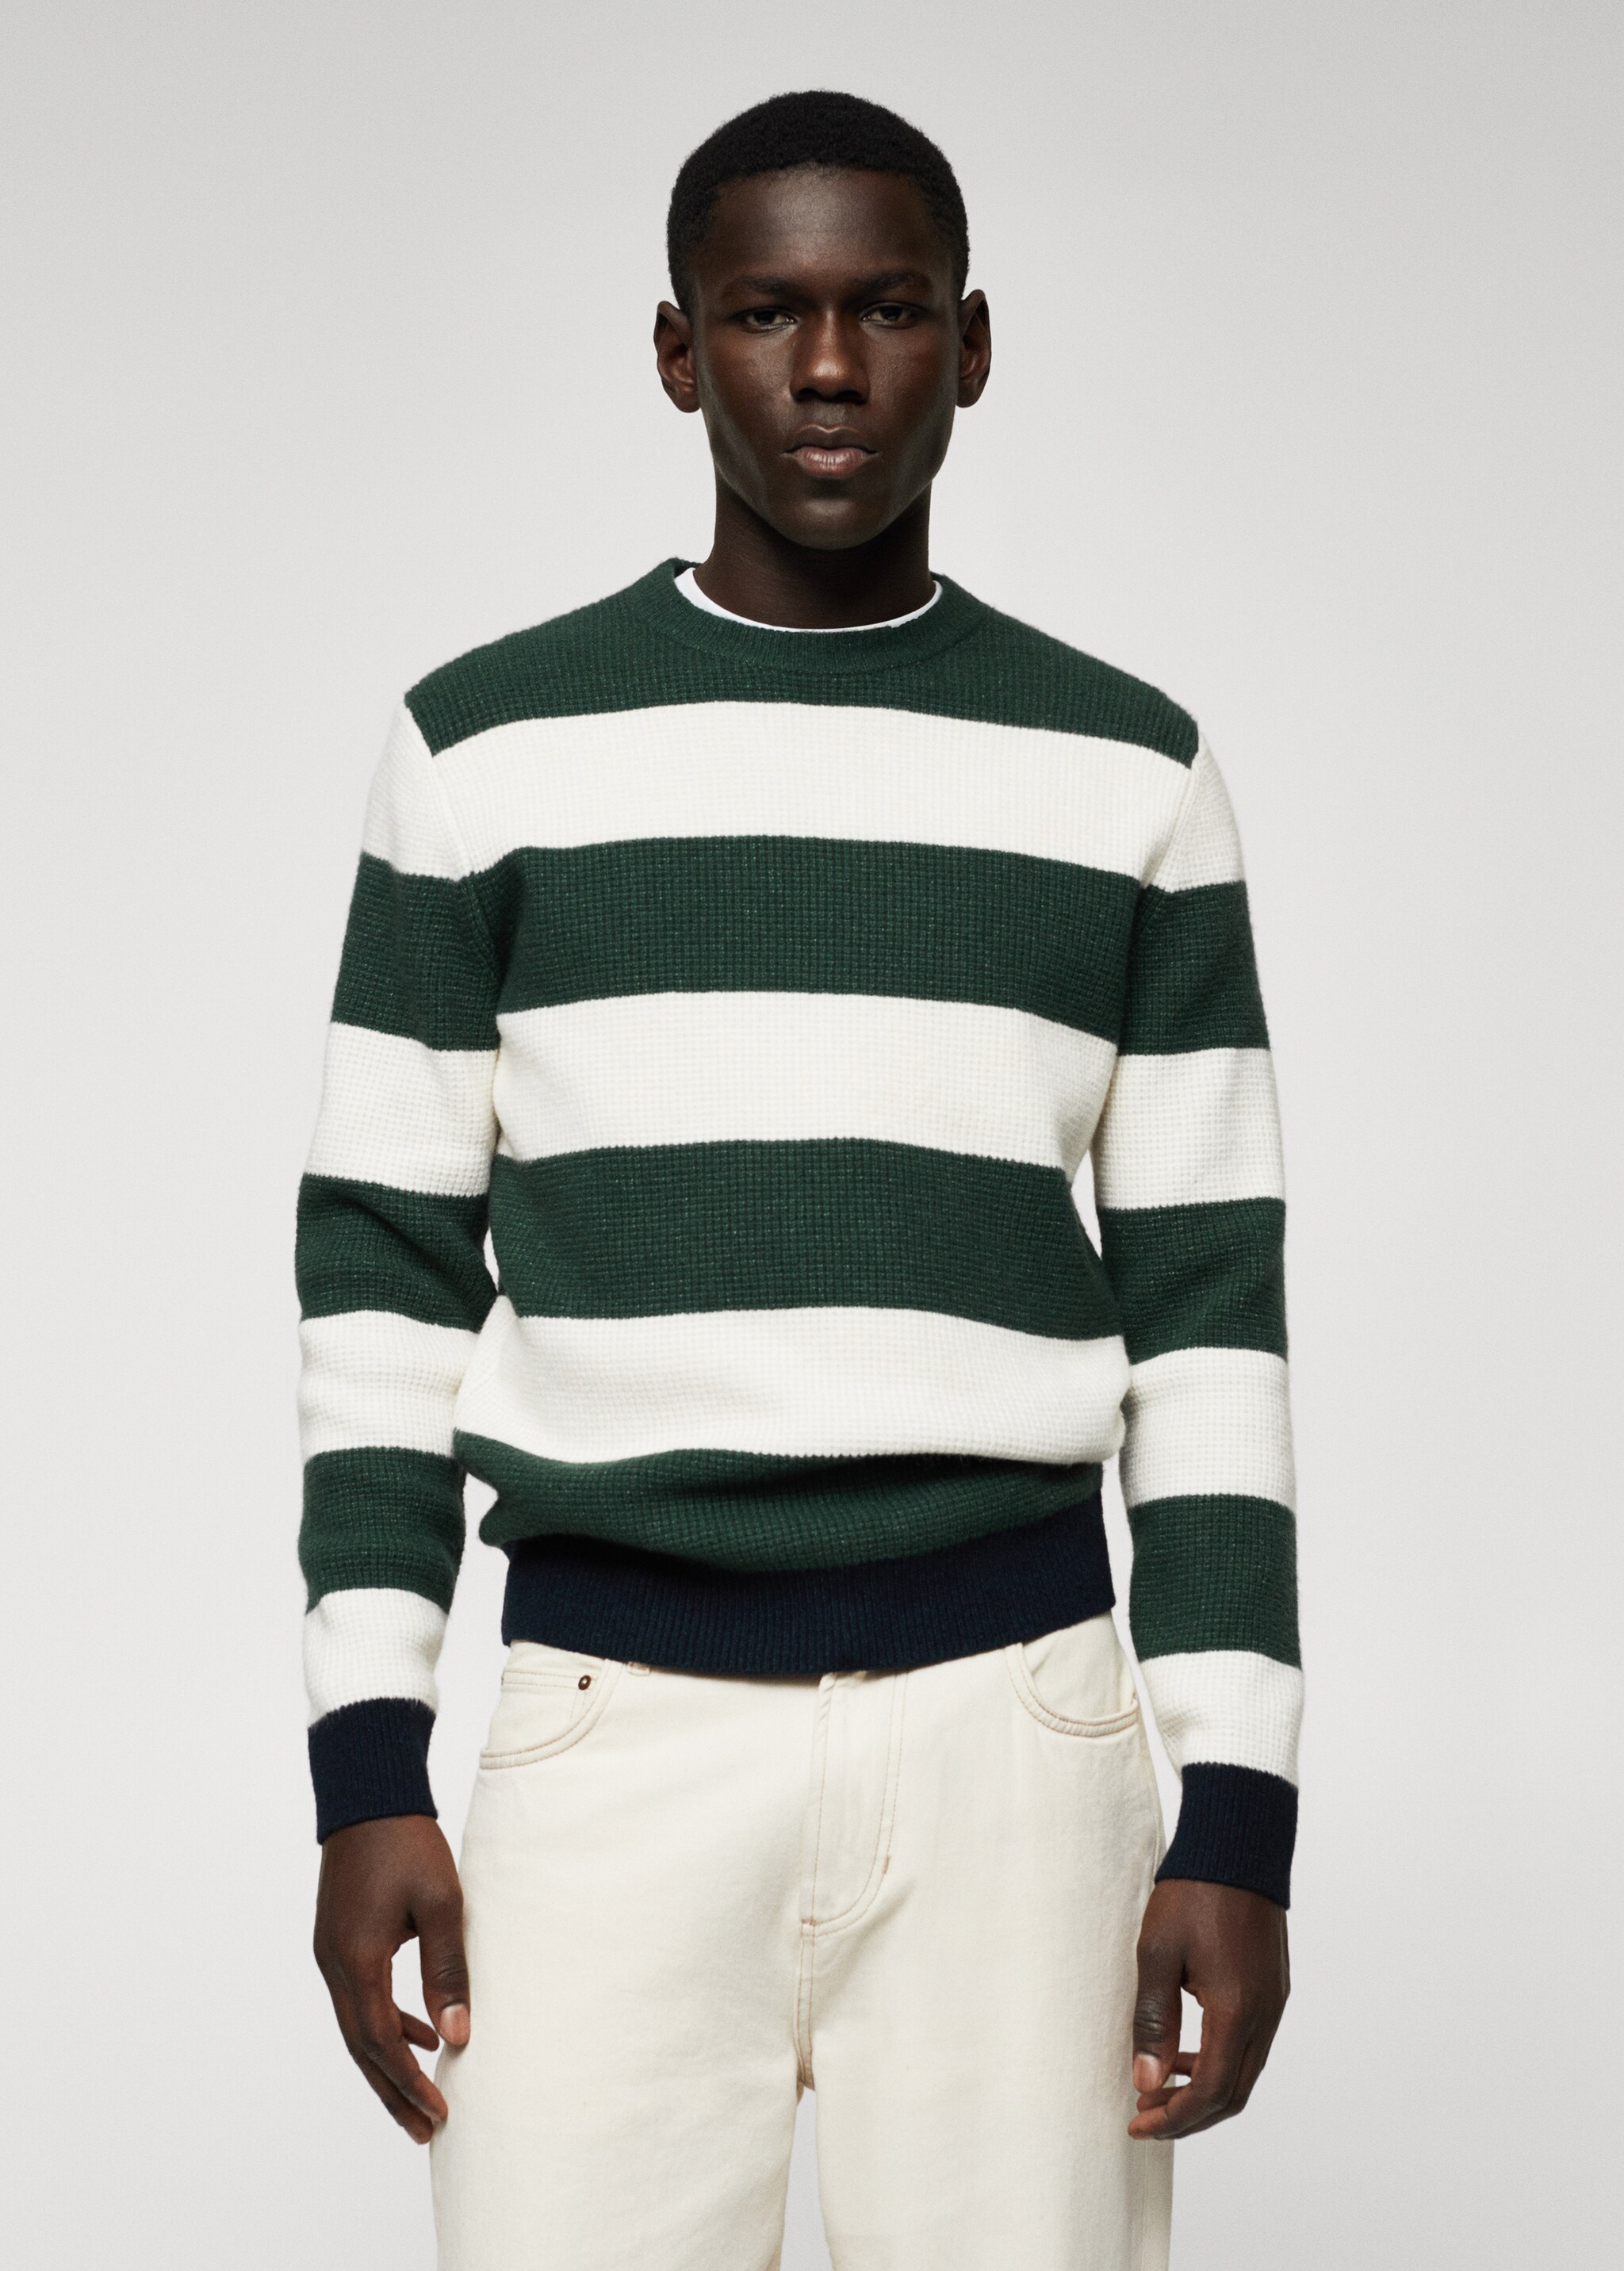 Contrasting stripes sweater - Medium plane